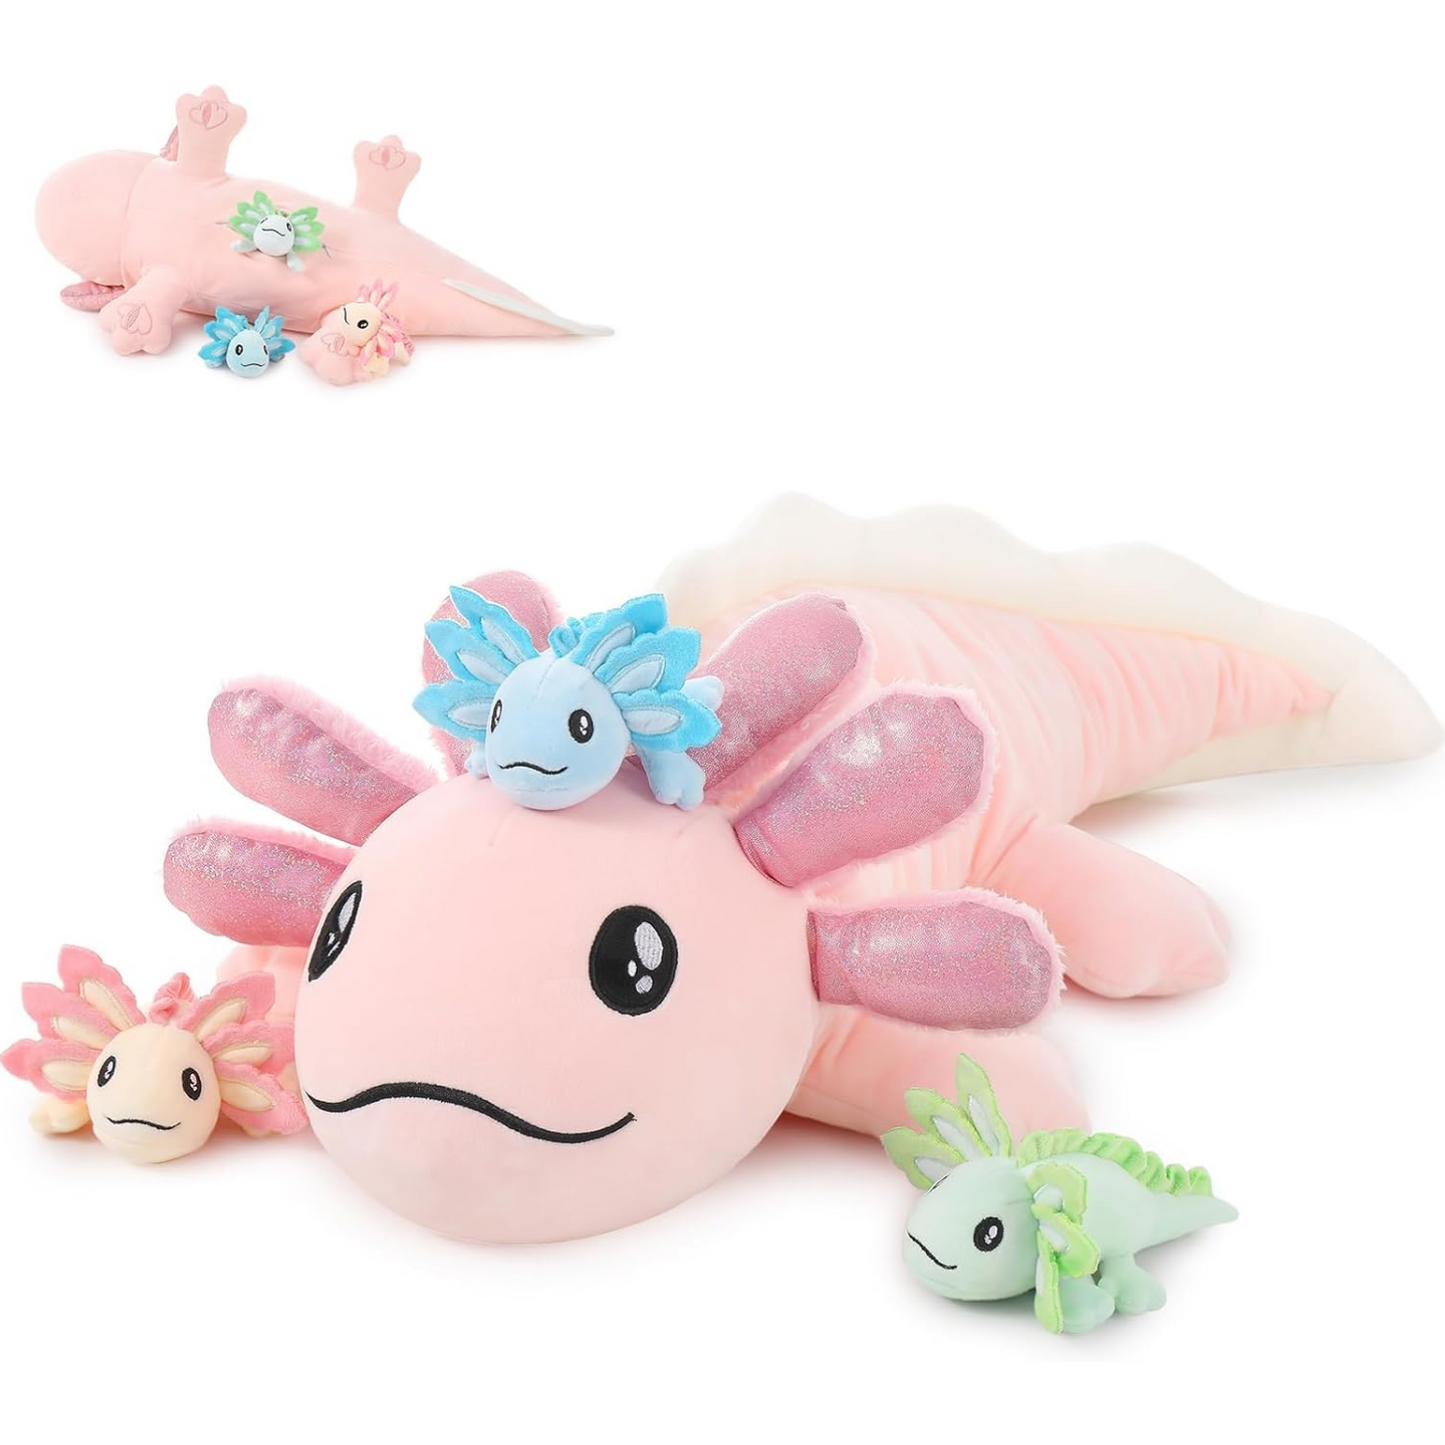 axolotl-plush-toys-salamander-stuffed-animals-stuffed-axolotl-cute-axolotl-plushies-birthday-gift-for-kids-baby-shower-gift-ideas-pink-plushies